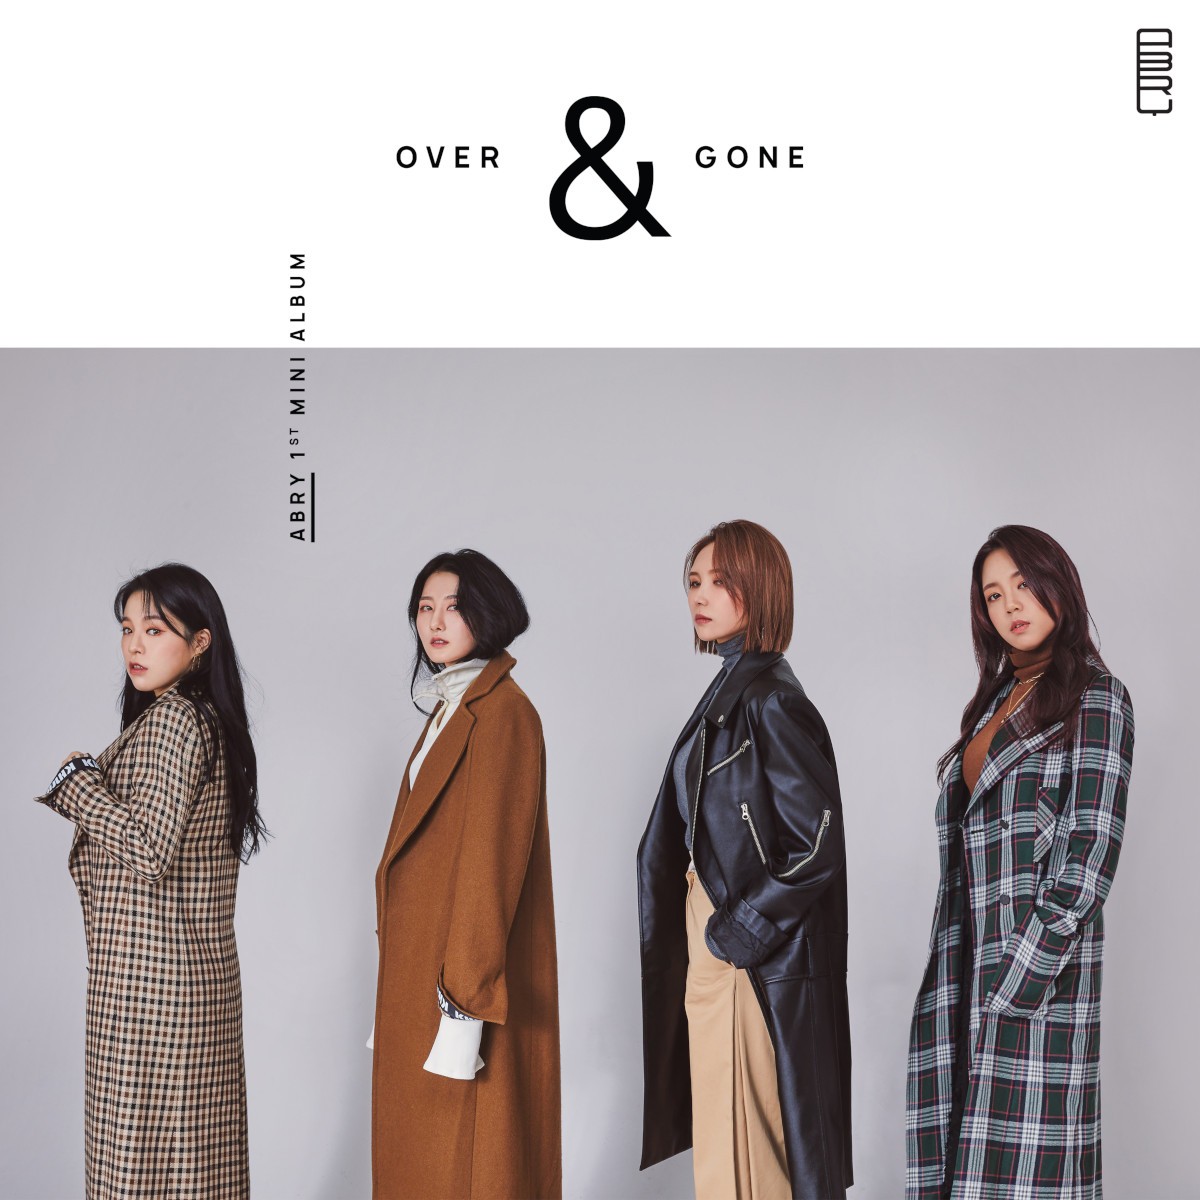 ABRY – OVER & GONE [FLAC + MP3 320 / WEB] [2018.10.28]